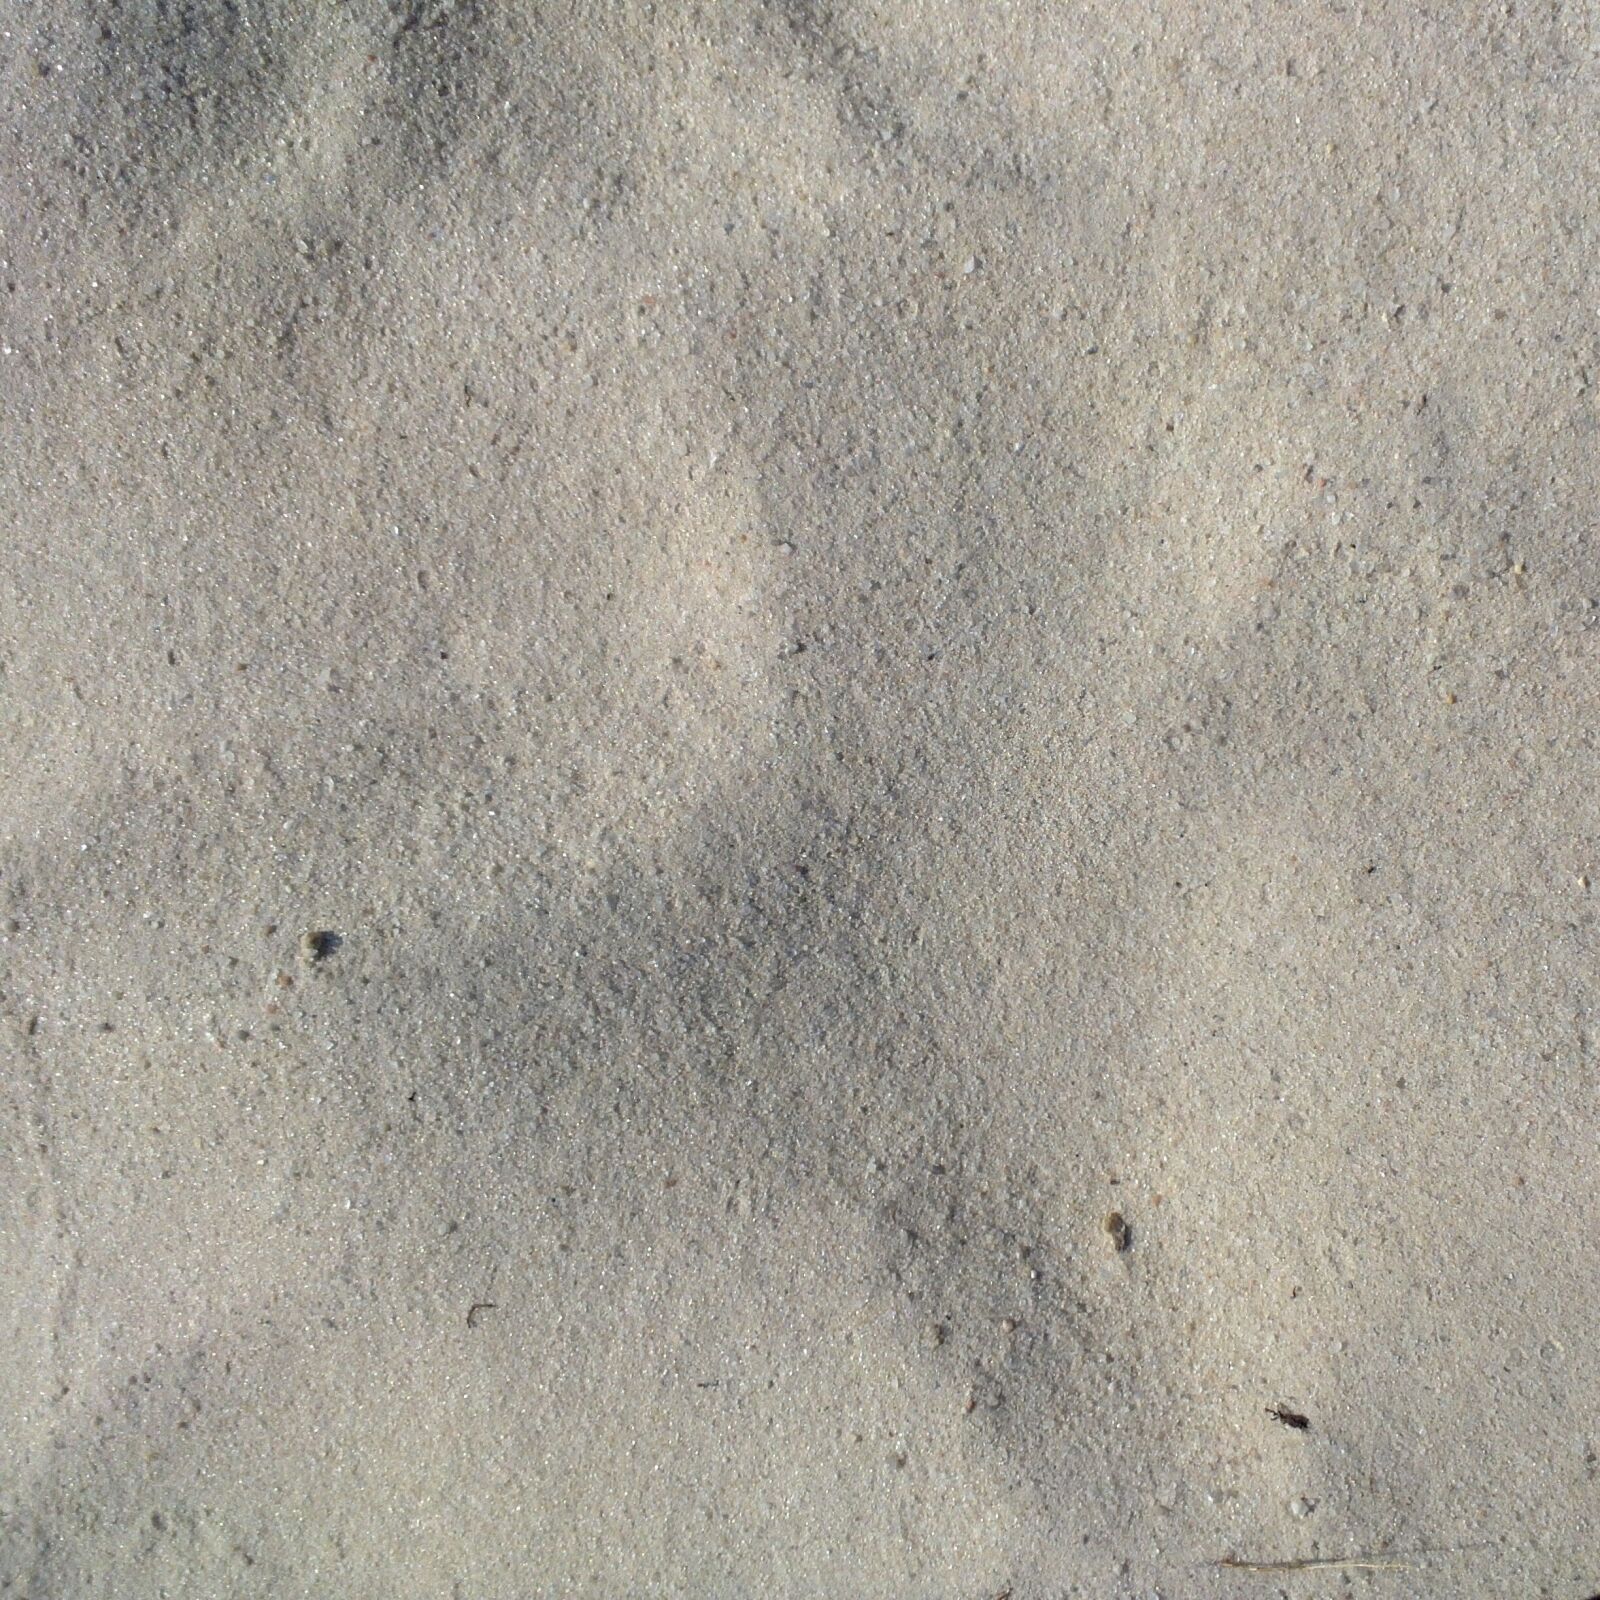 Nokia N9 sample photo. Nature, sand, landscape photography